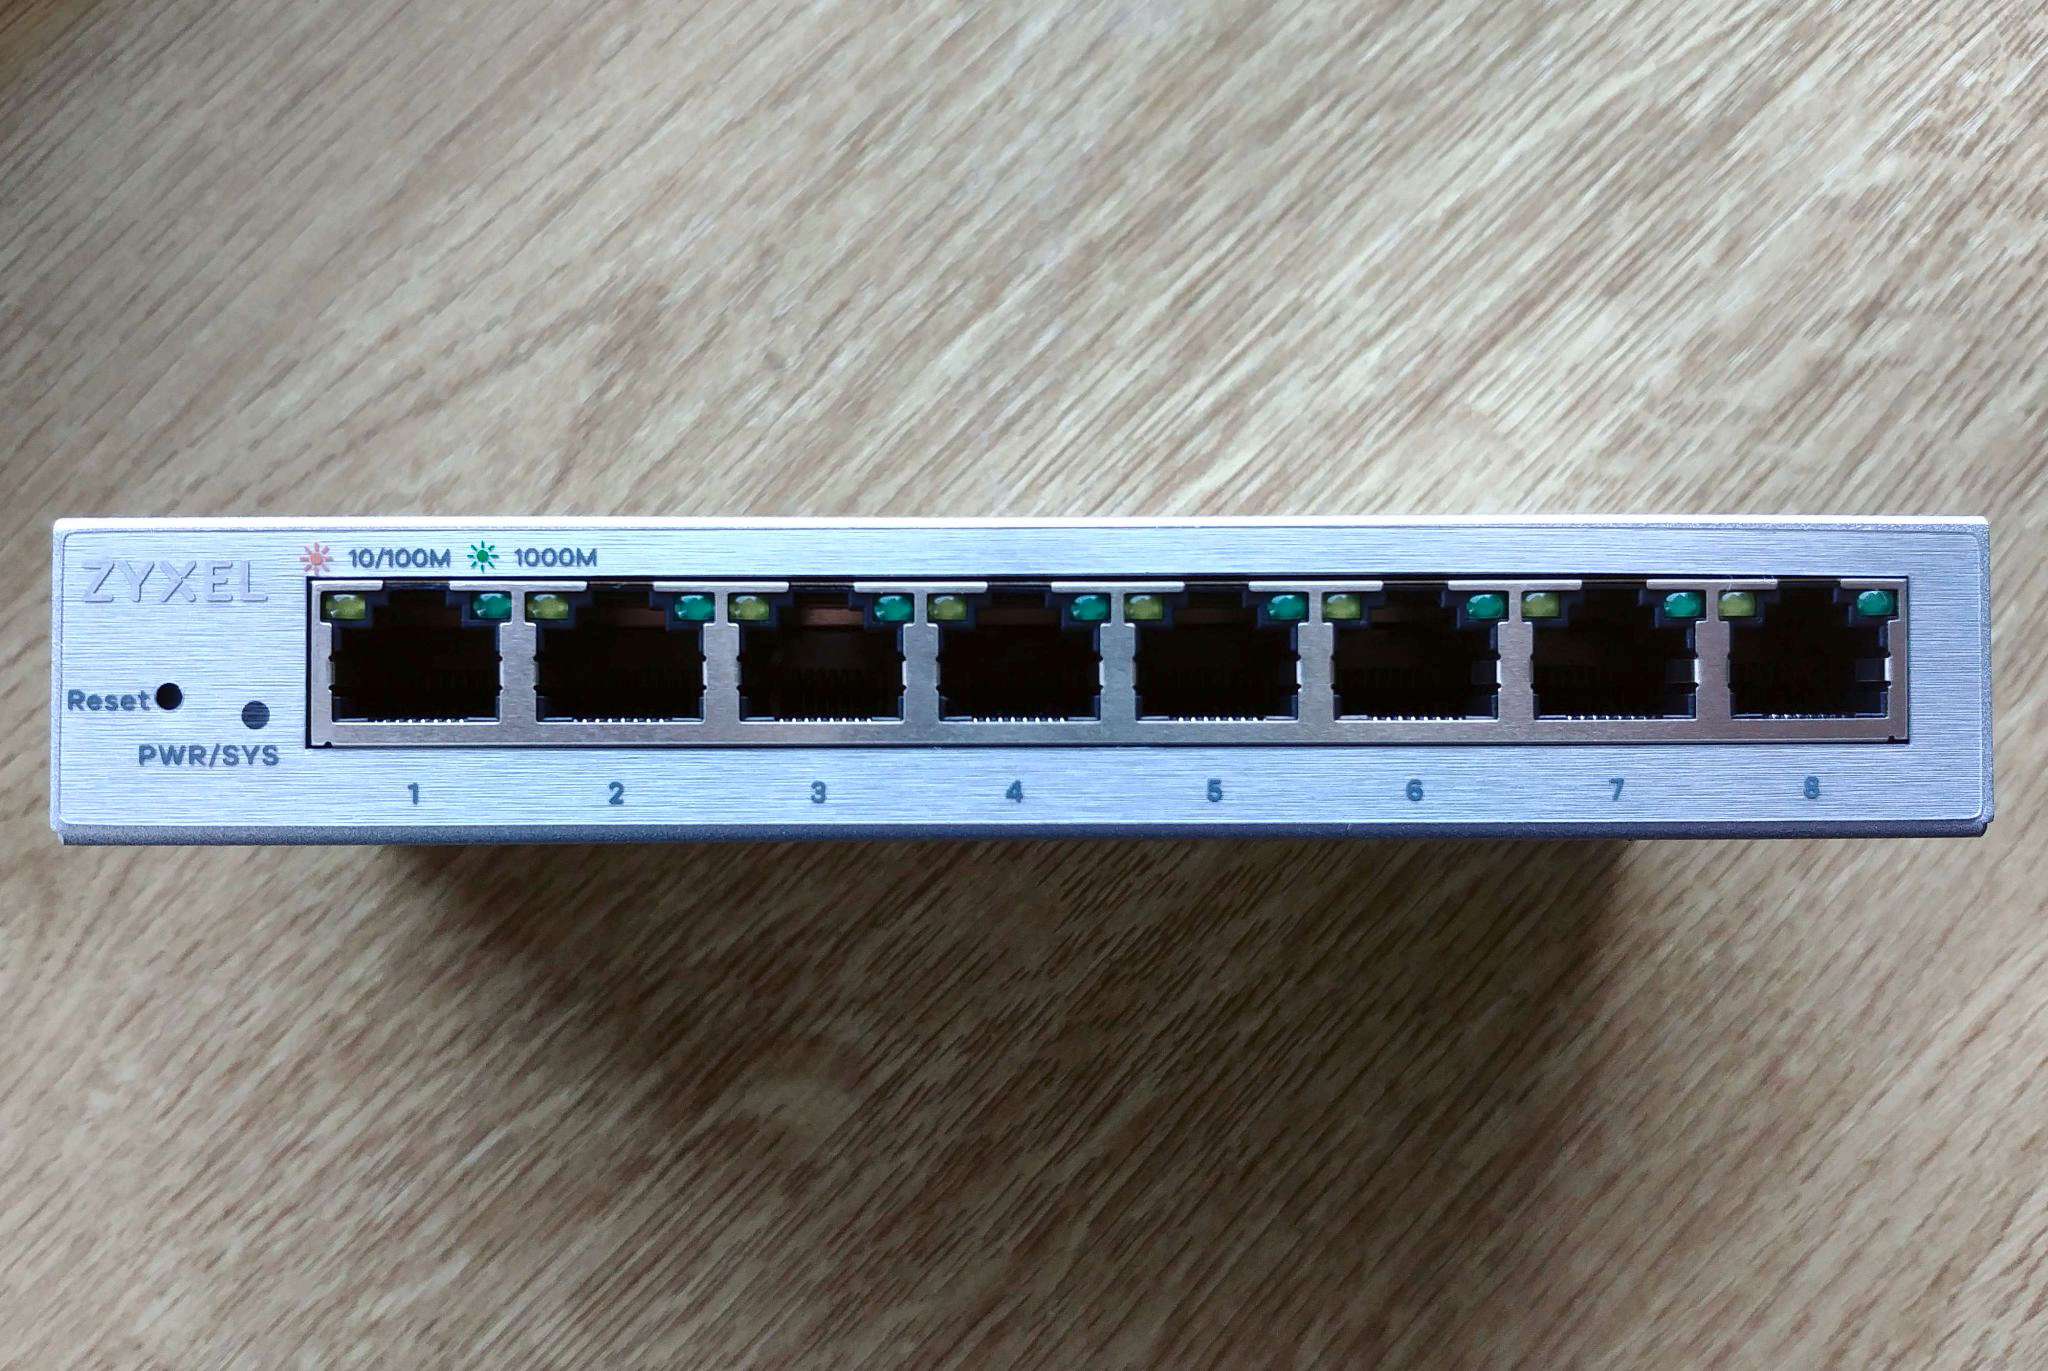 Gs1200 8. ZYXEL gs1200-8. Коммутатор ZYXEL GS-1200-5. Коммутатор ZYXEL gs1200-8. ZYXEL коммутатор 8 портов.